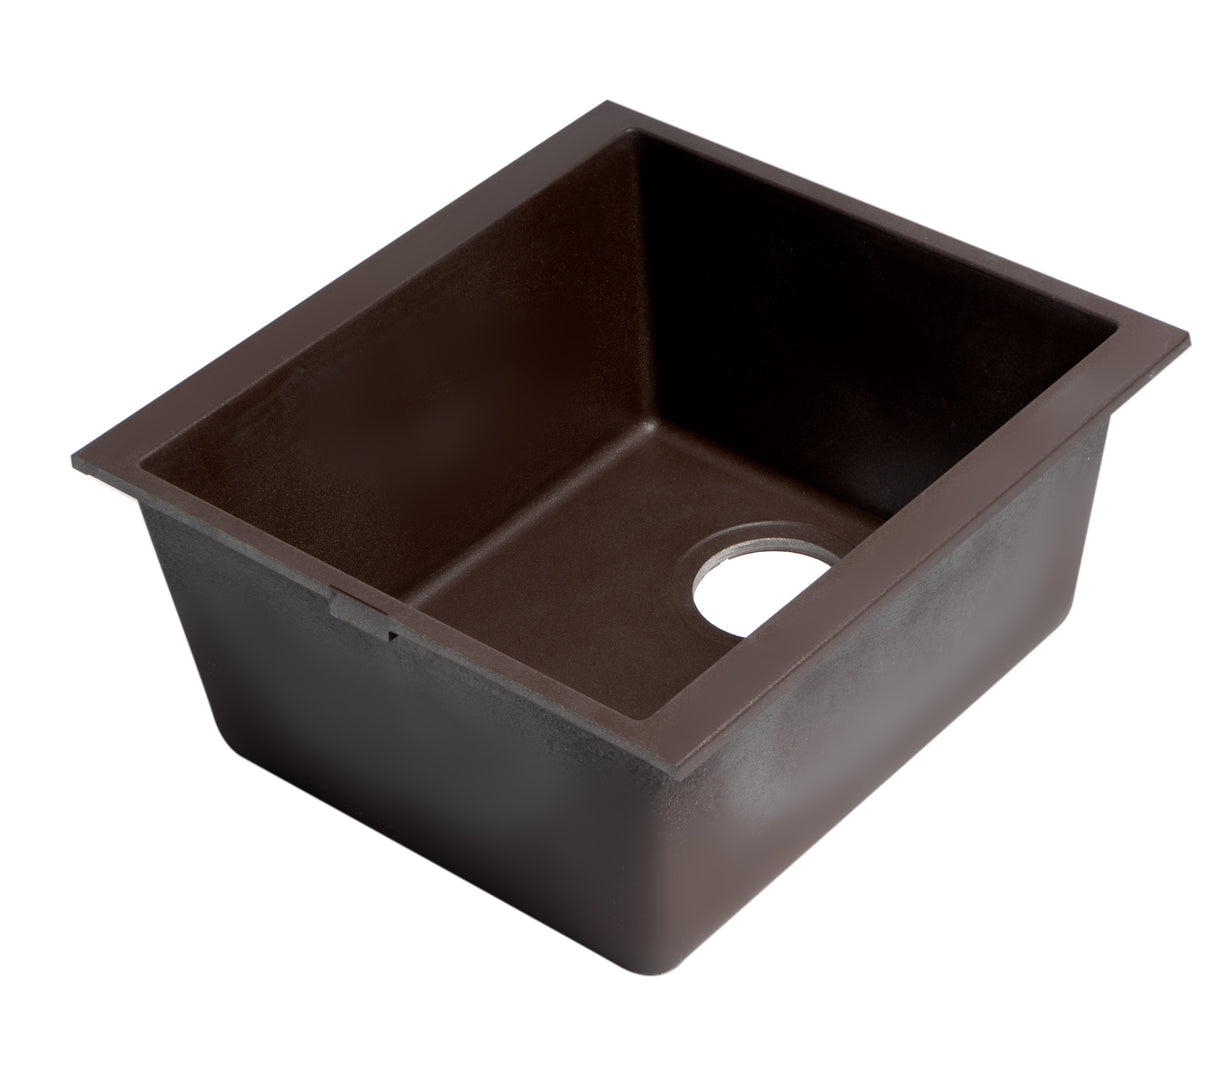 ALFI brand AB1720UM-C Chocolate 17" Undermount Rectangular Granite Composite Kitchen Prep Sink